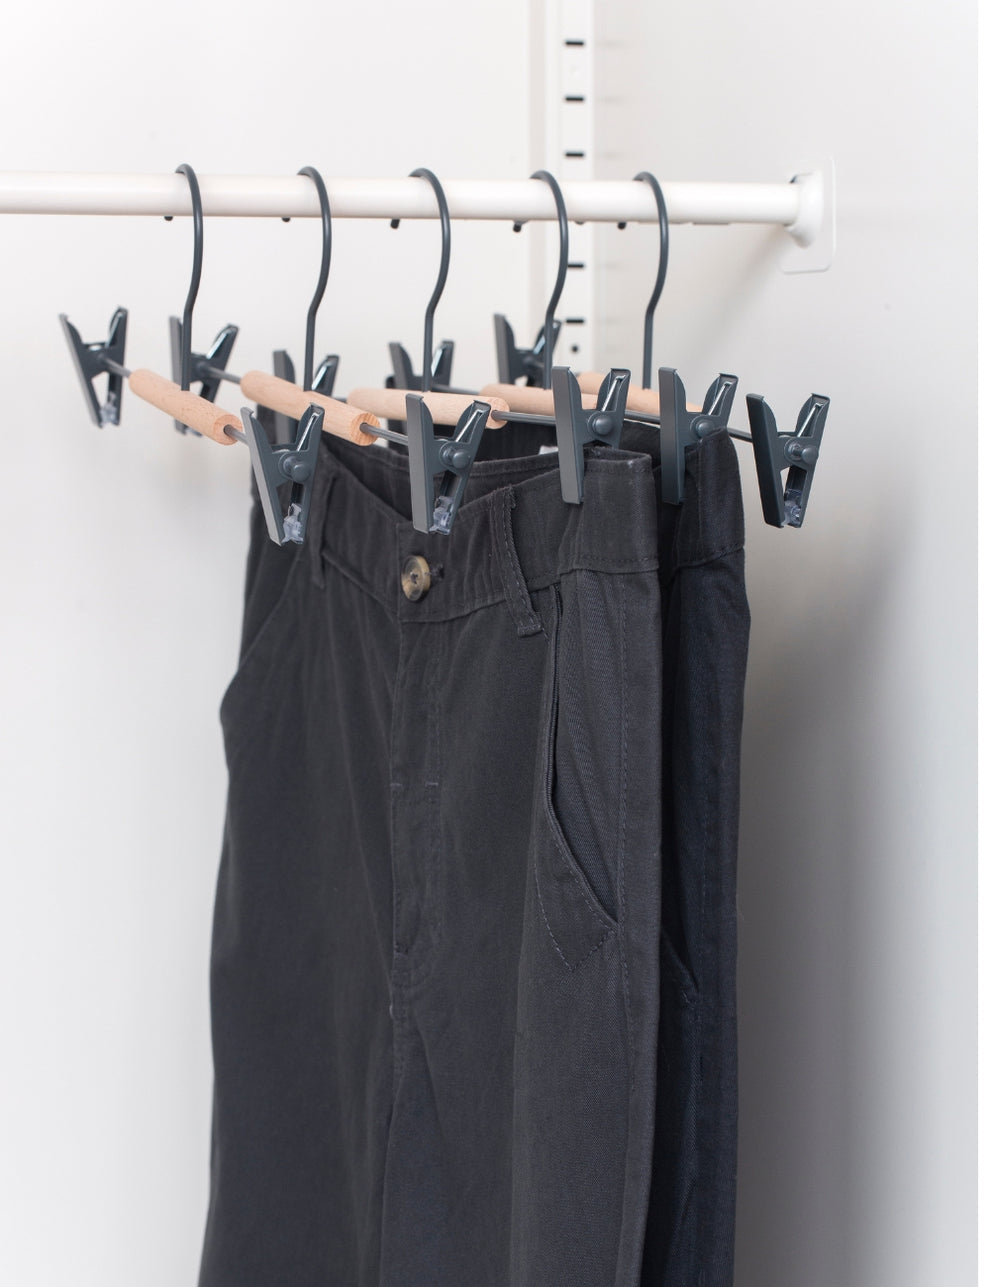 Adult Clip Hangers in Slate